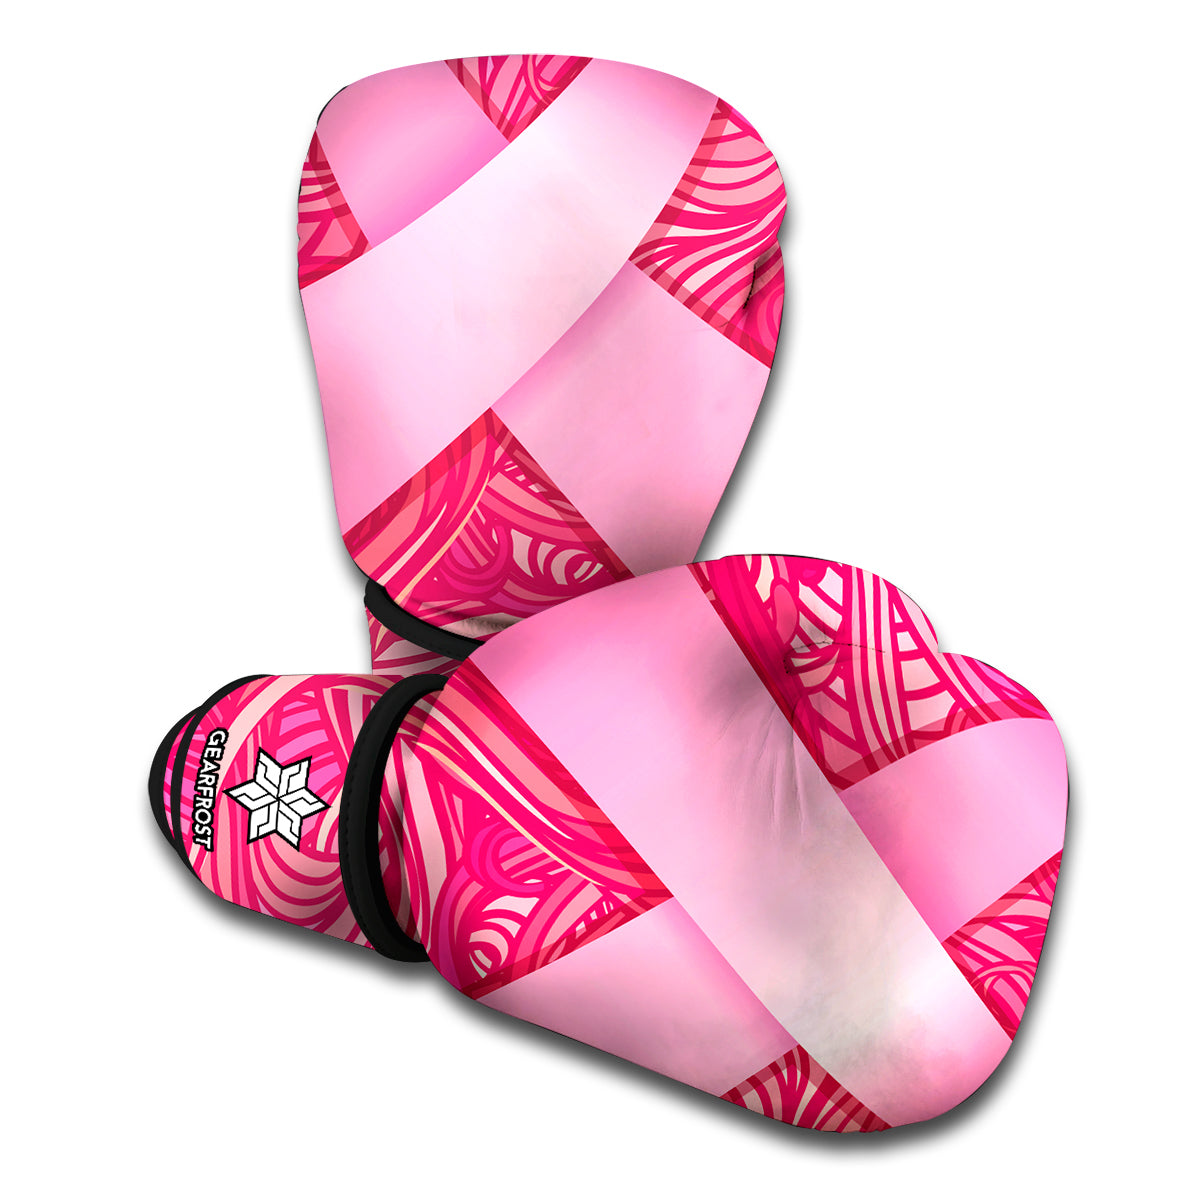 Breast Cancer Awareness Ribbon Print Boxing Gloves